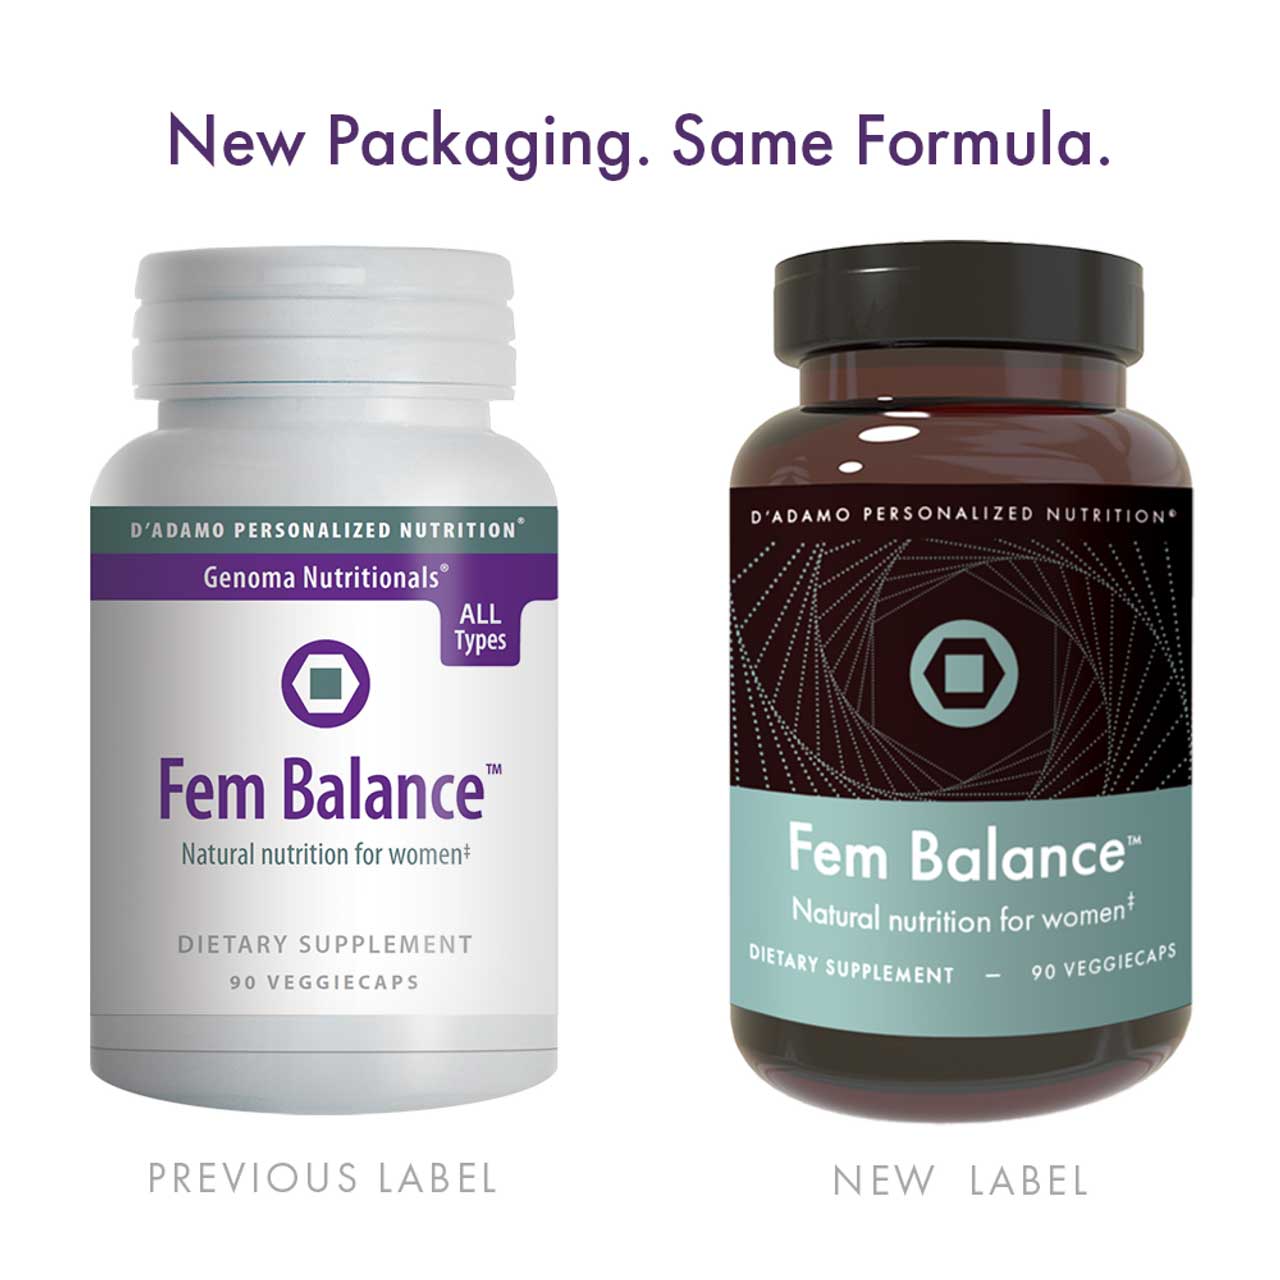 D'Adamo Personalized Nutrition Fem Balance New Label